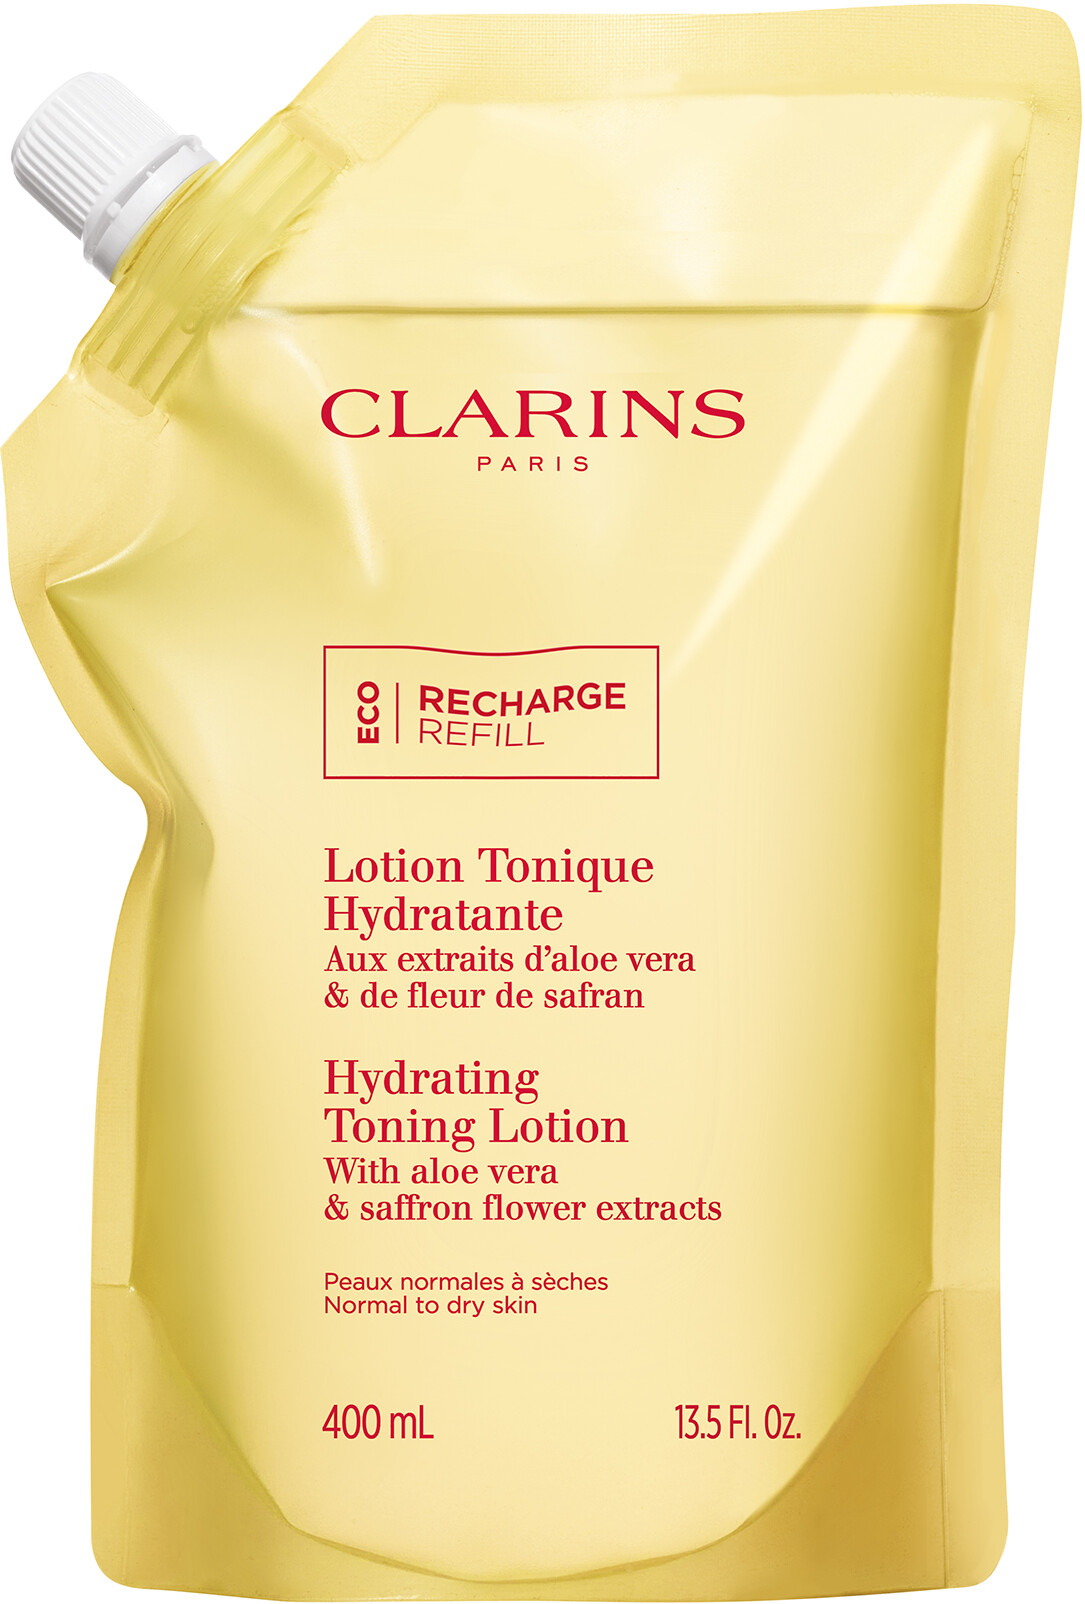 Clarins Hydrating Toning Lotion 400ml Refill